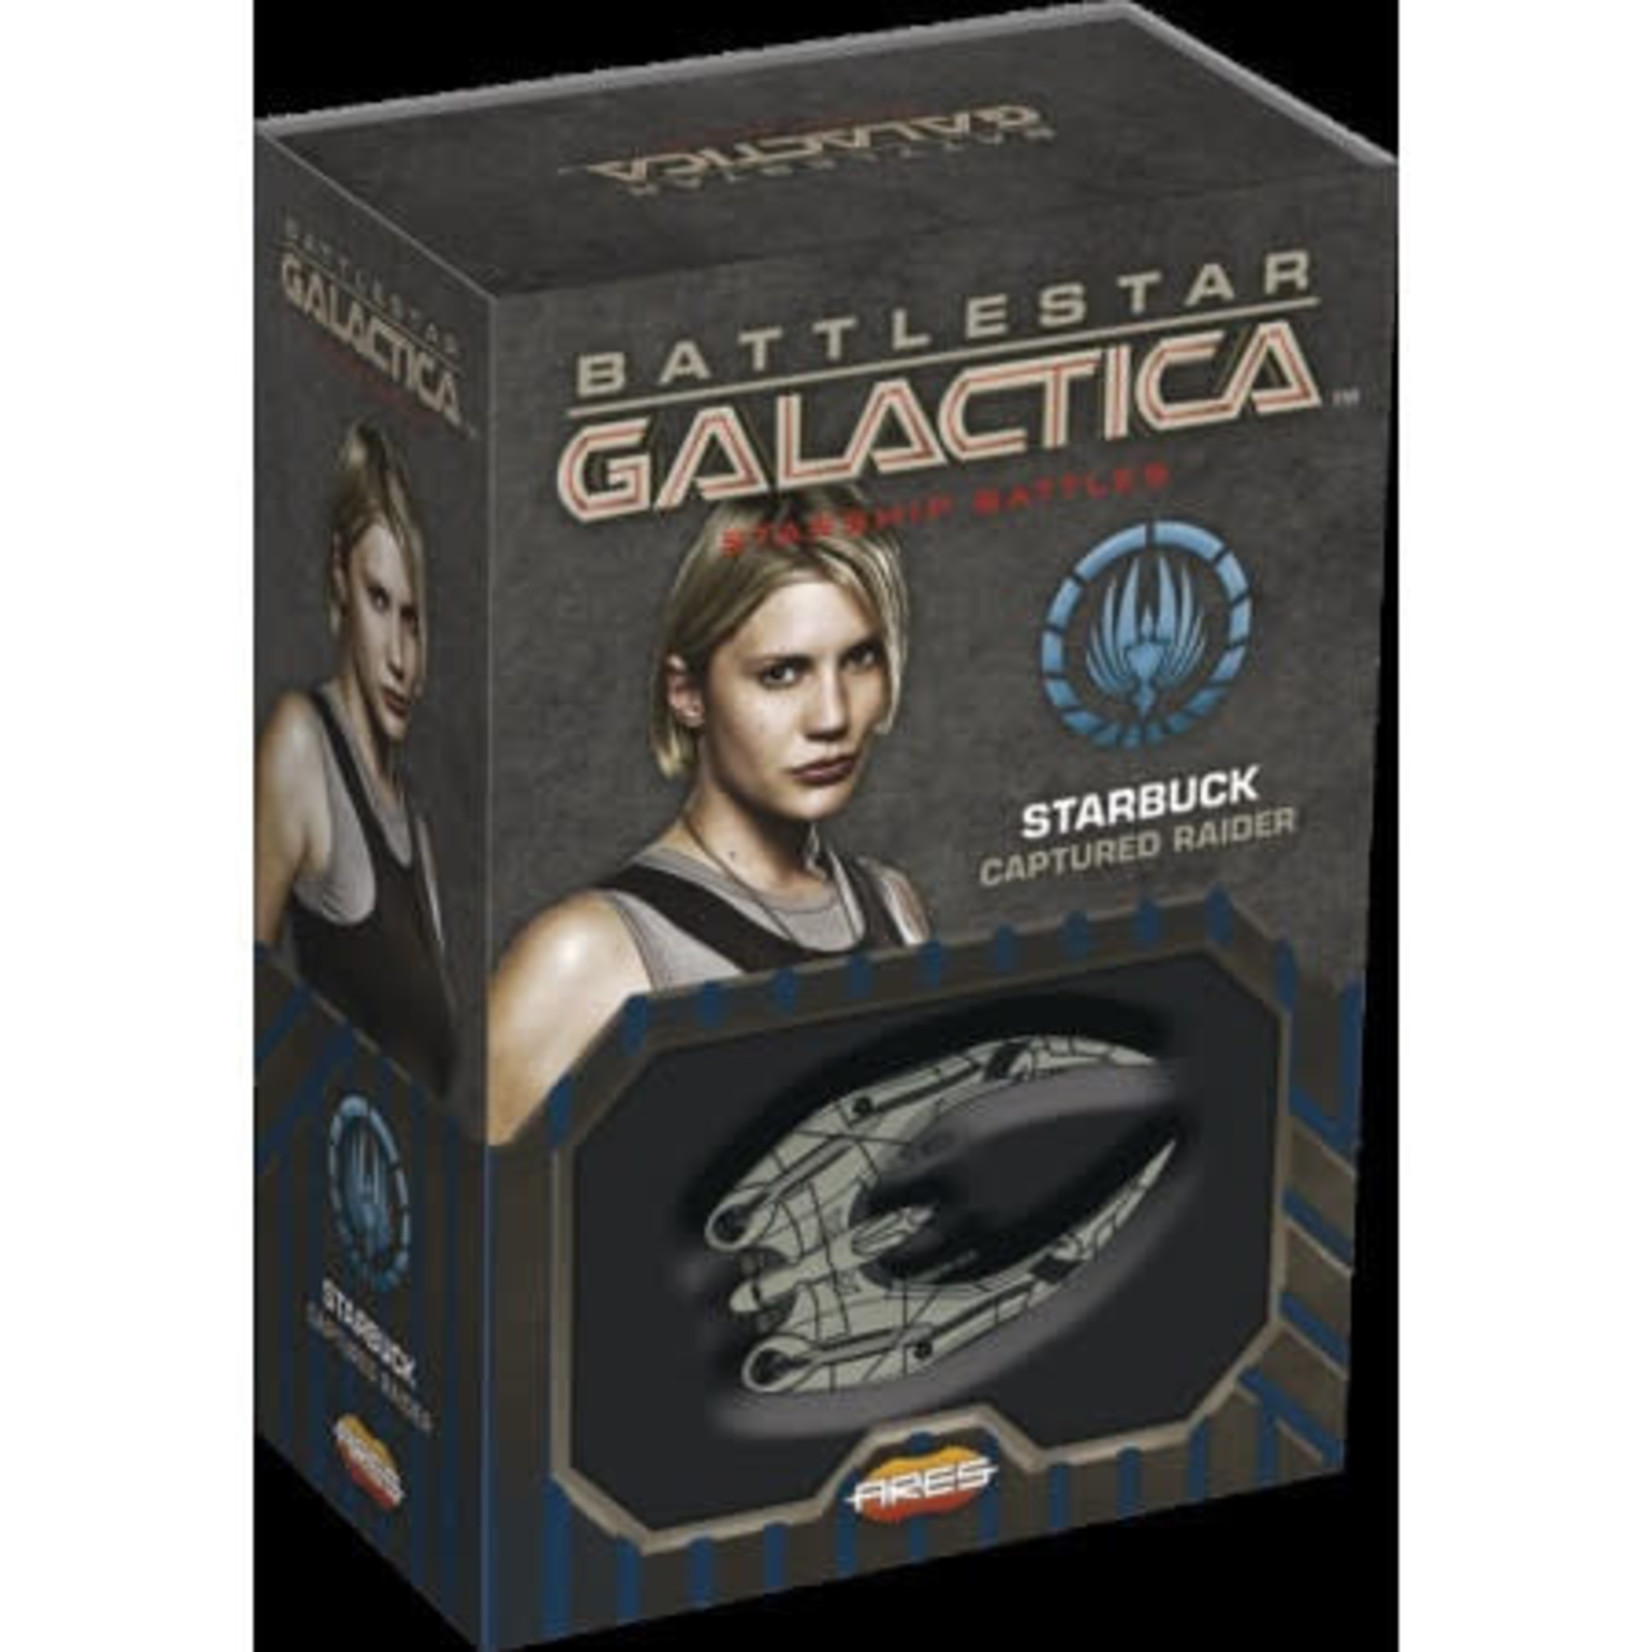 Starbucks Cylon Raider: Battlestar Galactica: Starship Battles - Spaceship Pack